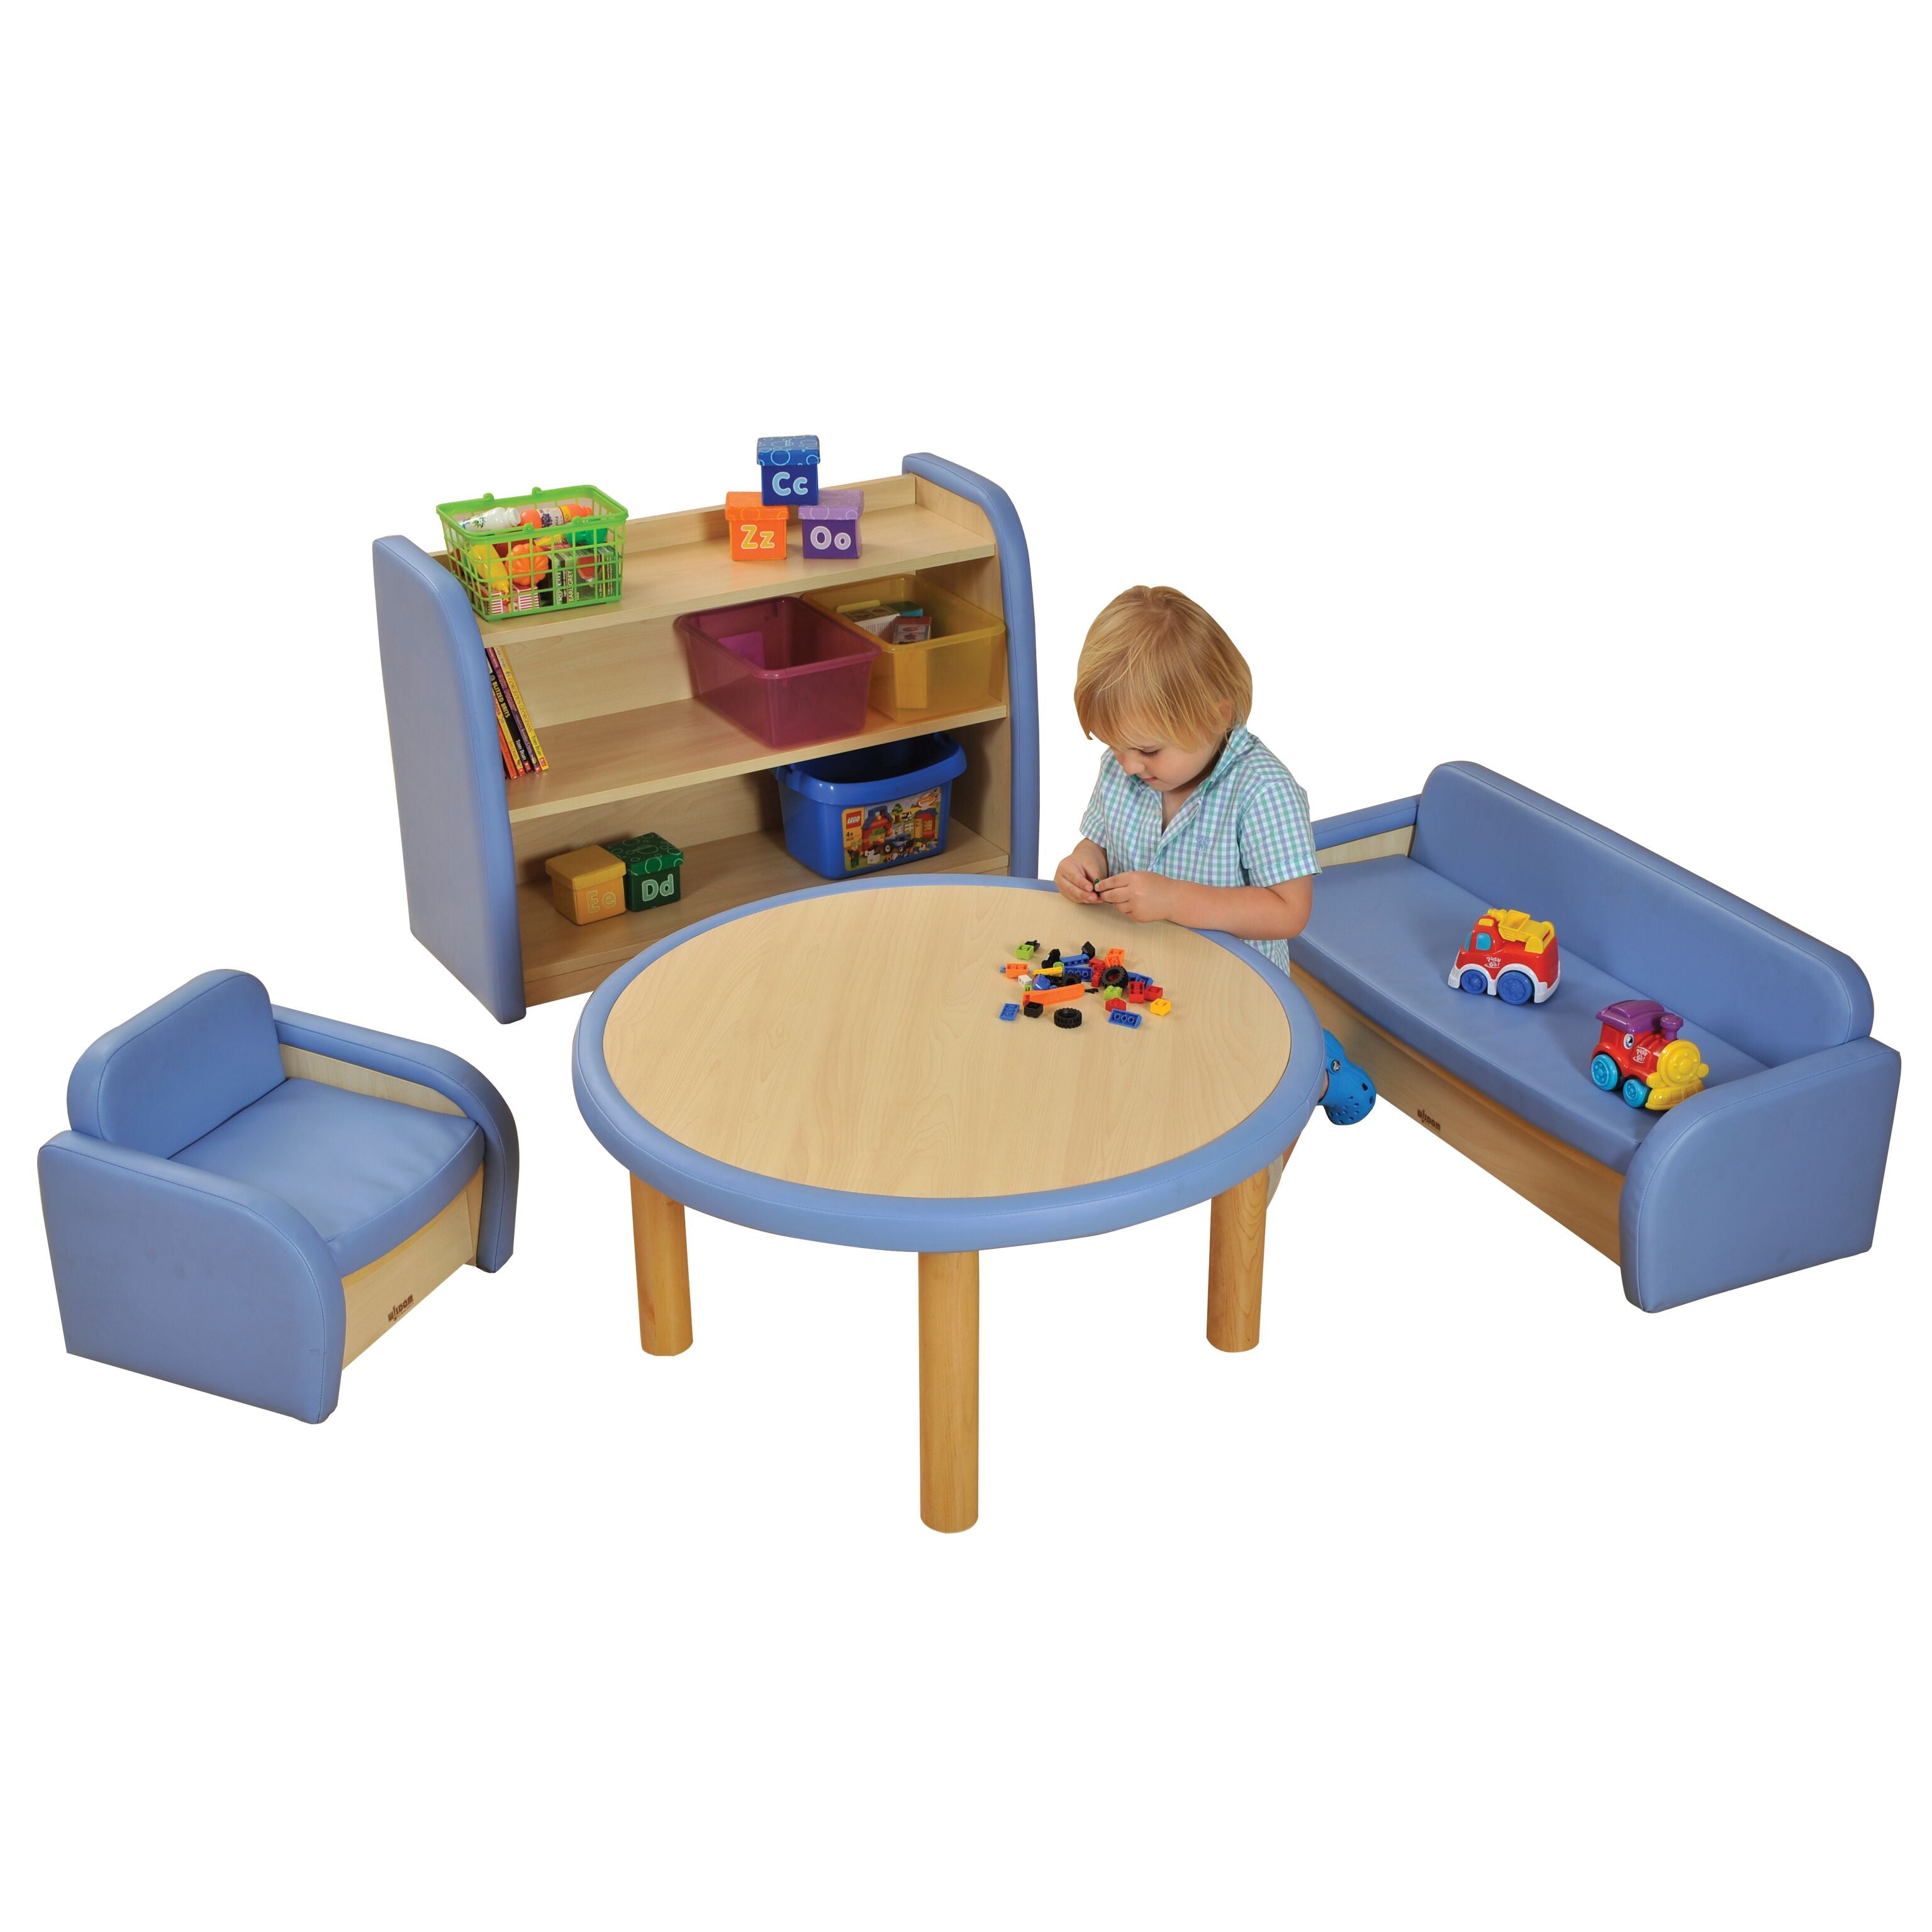 Safespace Toddler 2 Level Storage Cabinet